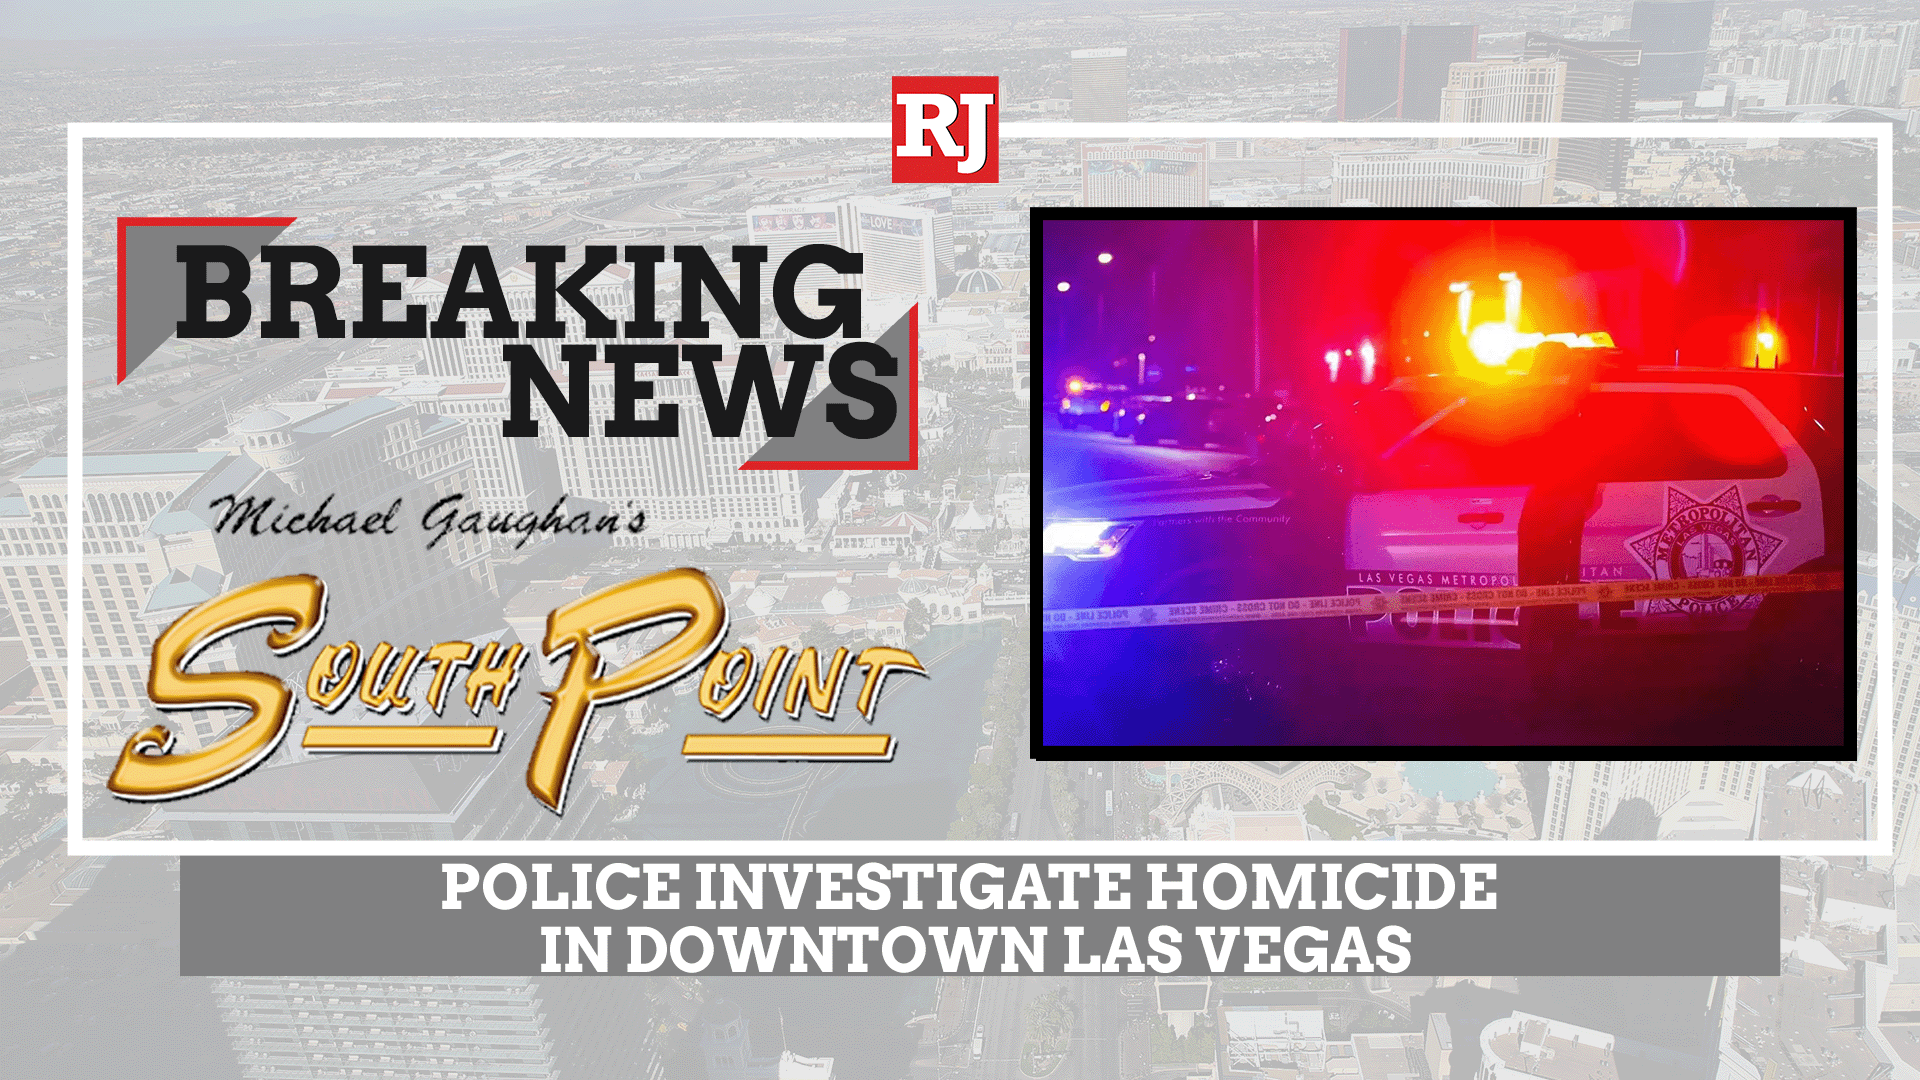 Police investigate homicide in downtown Las Vegas